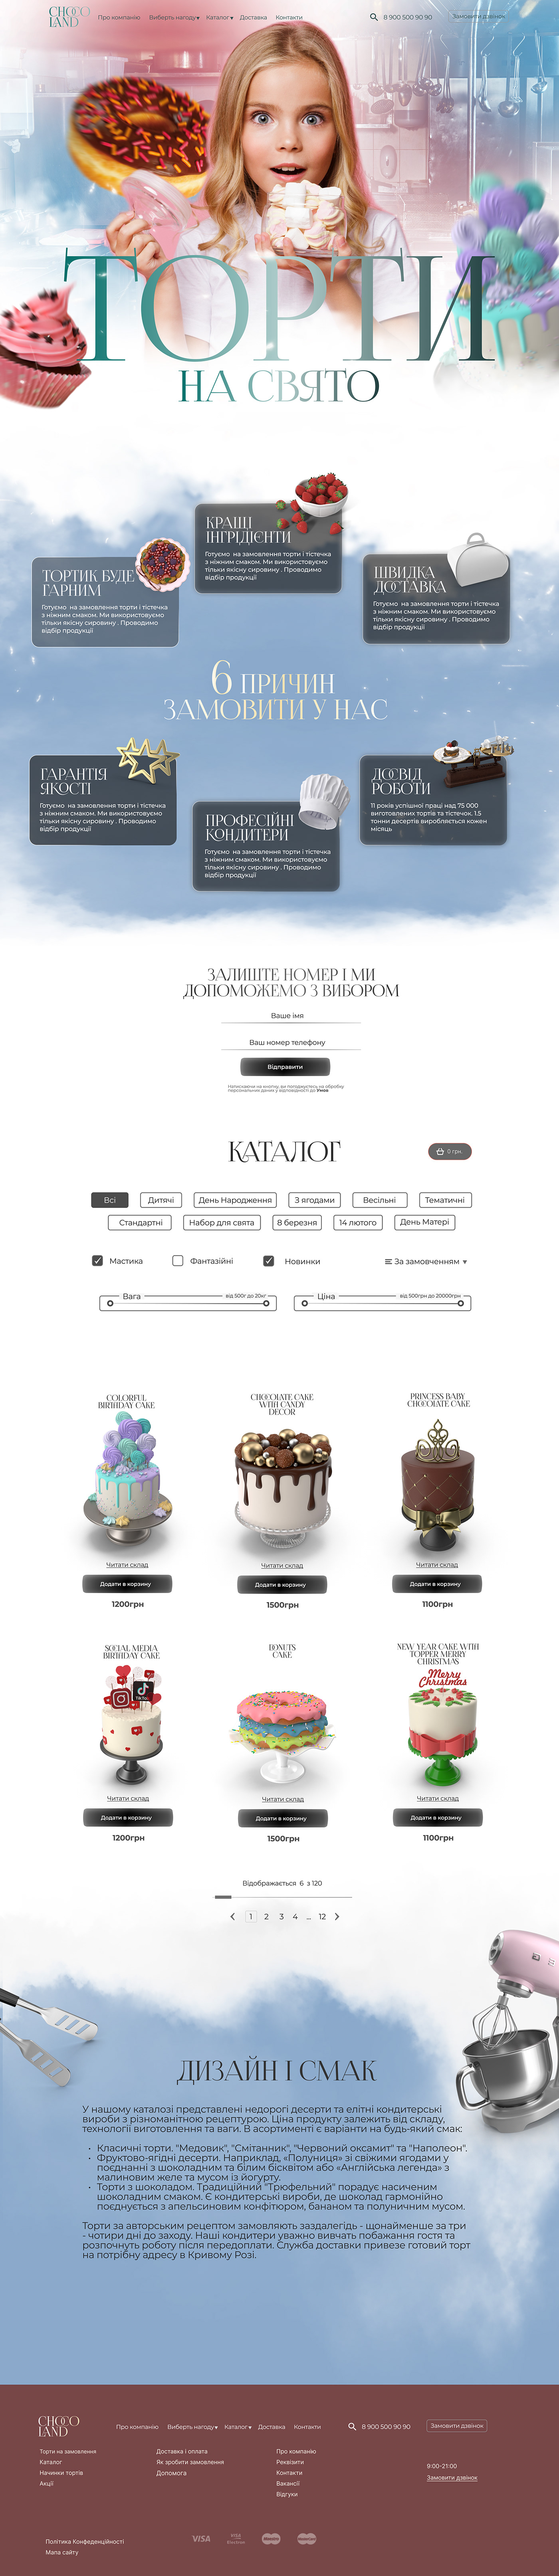 bakery cake shop cakes E-commerce Design e-Commerce website landing page UI/UX UX UI DESign Web Design  Website Design